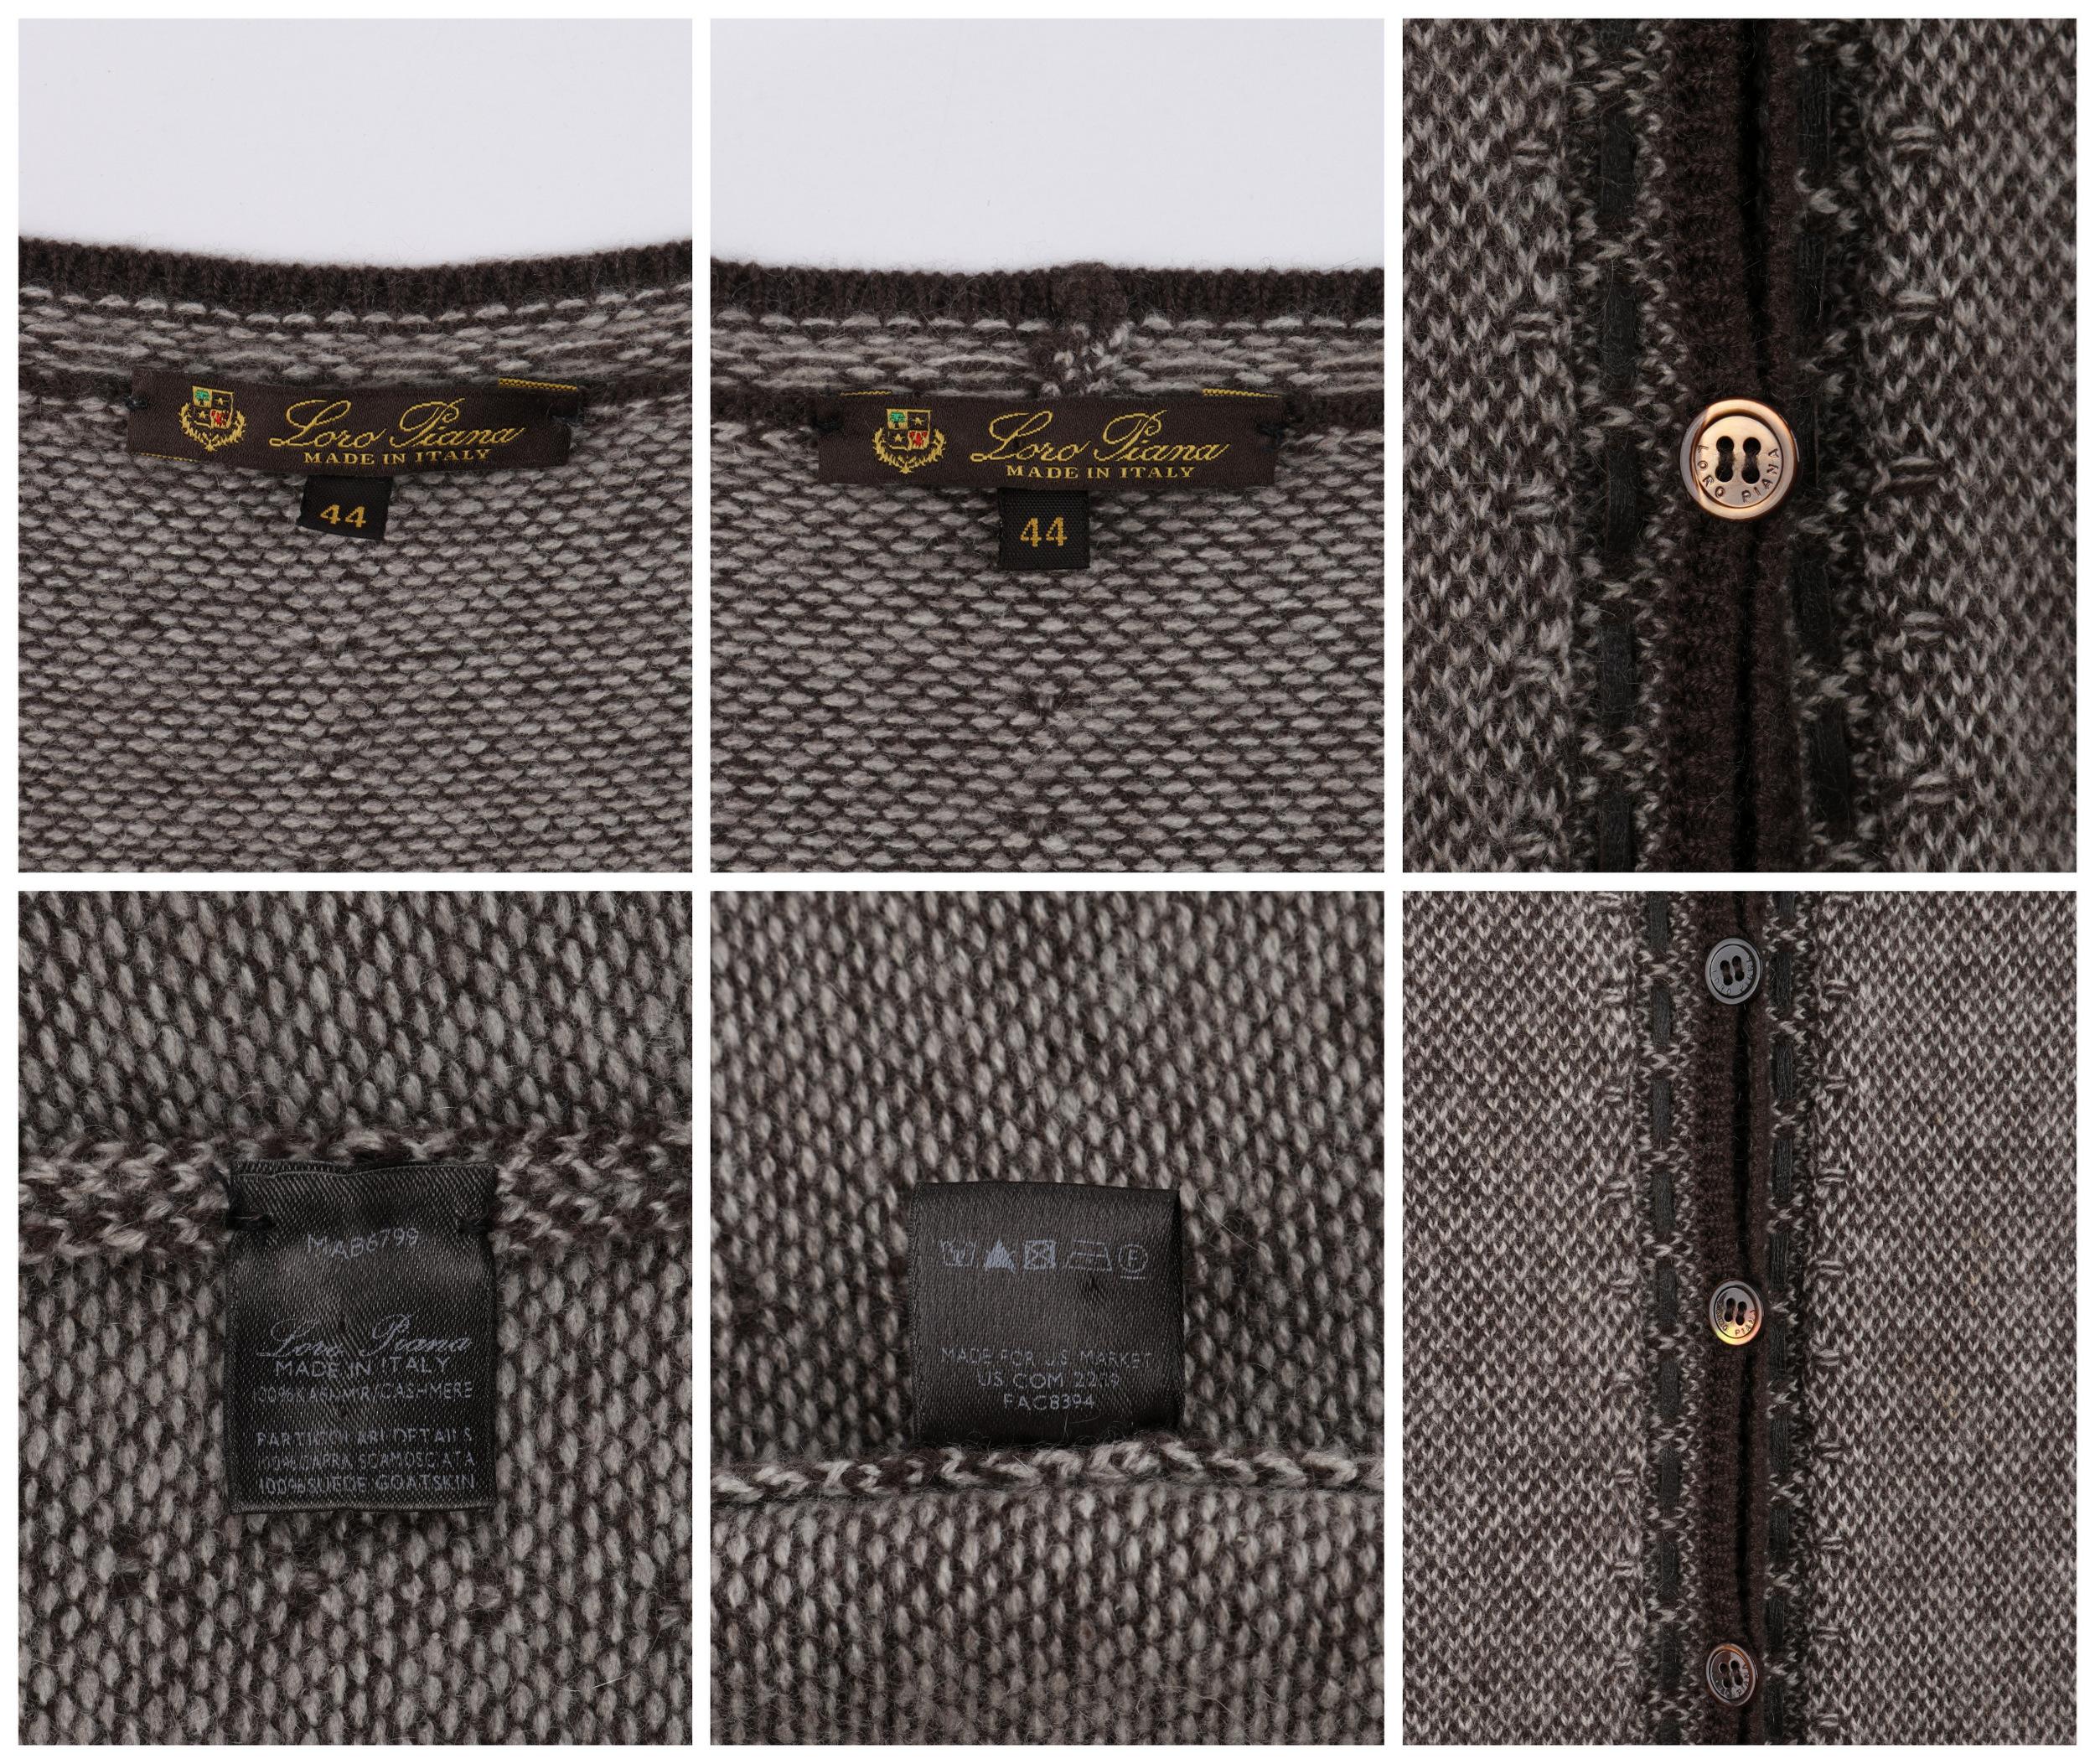 LORO PIANA Brown Cashmere Leather Tweed Knit Cardigan Dress Sweater Twin Set 44 3